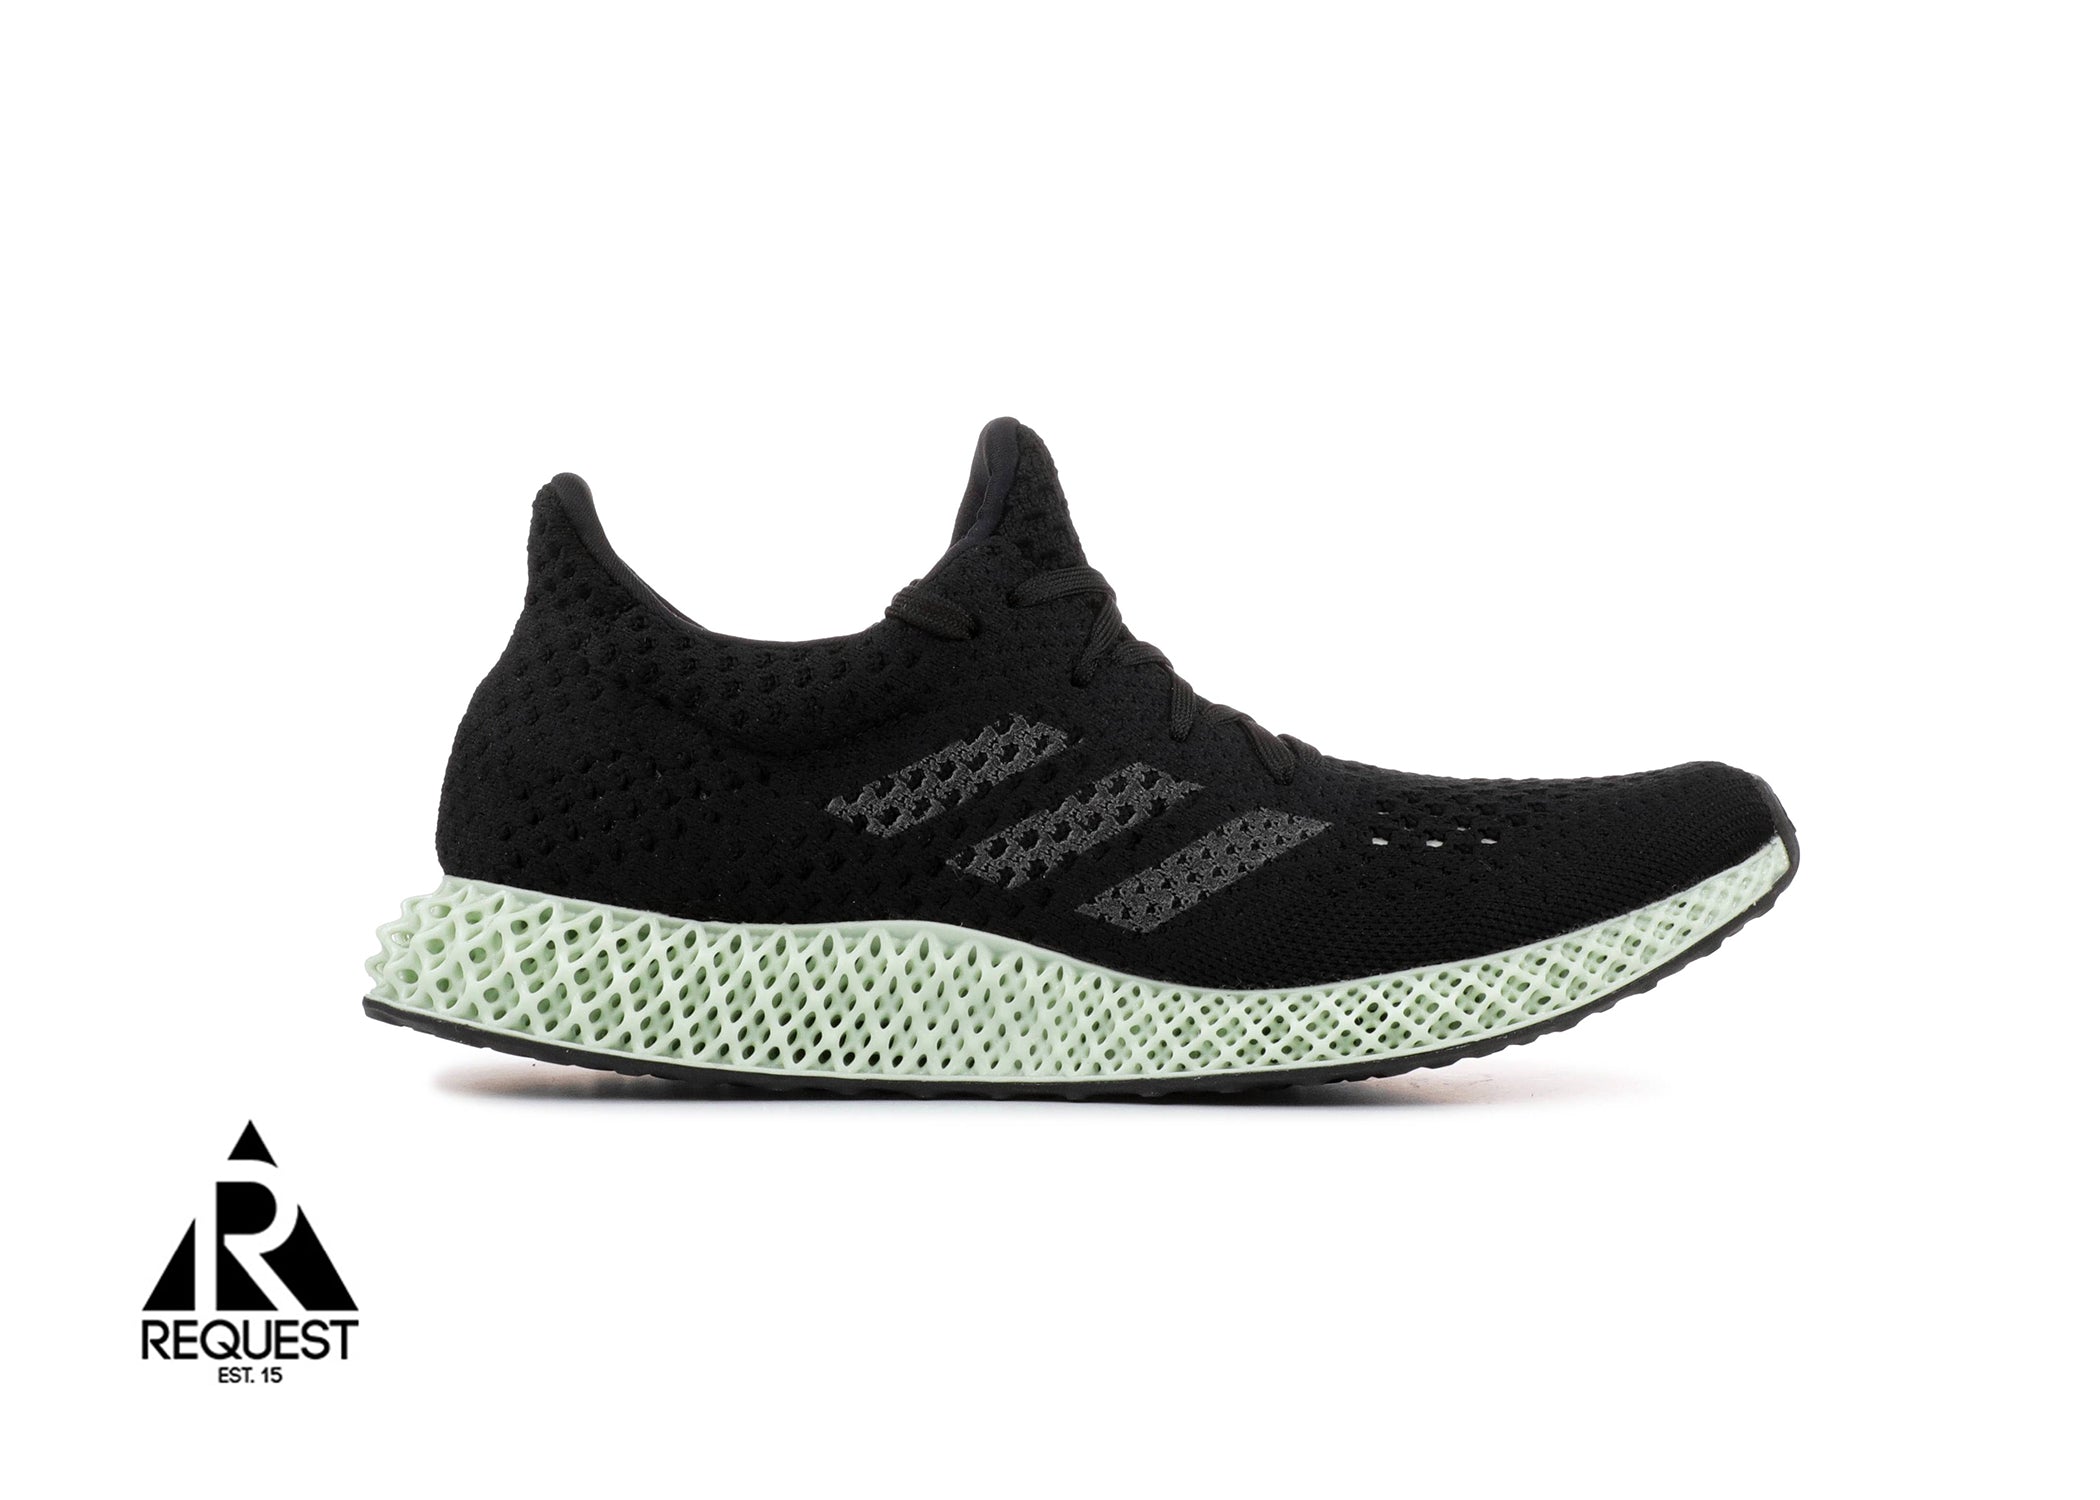 Adidas Futurecraft 4D “Ash Green”